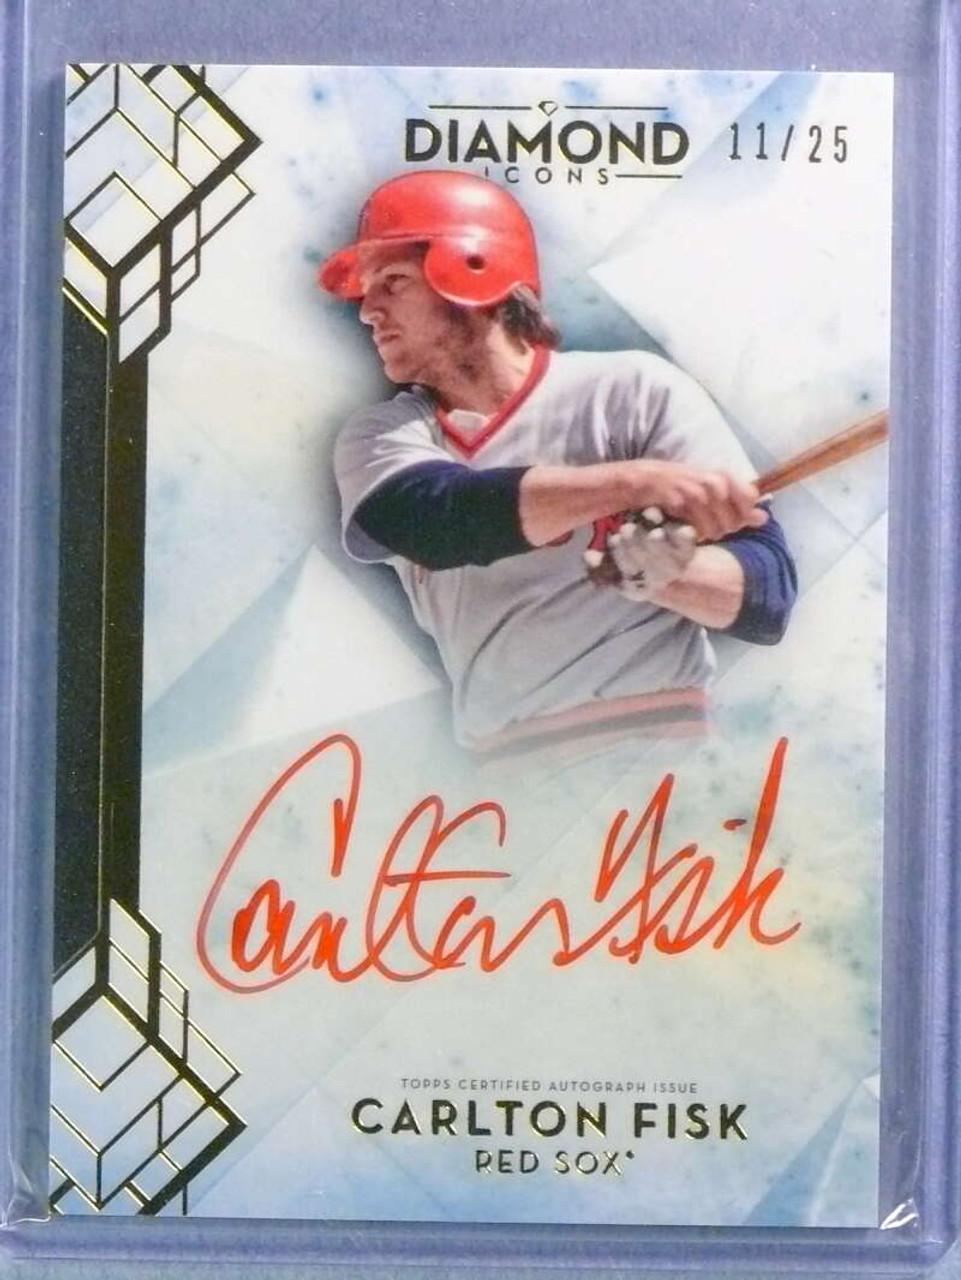 2020 Topps Diamond Icons Baseball Red Ink Carlton Fisk Autograph Auto #11/25